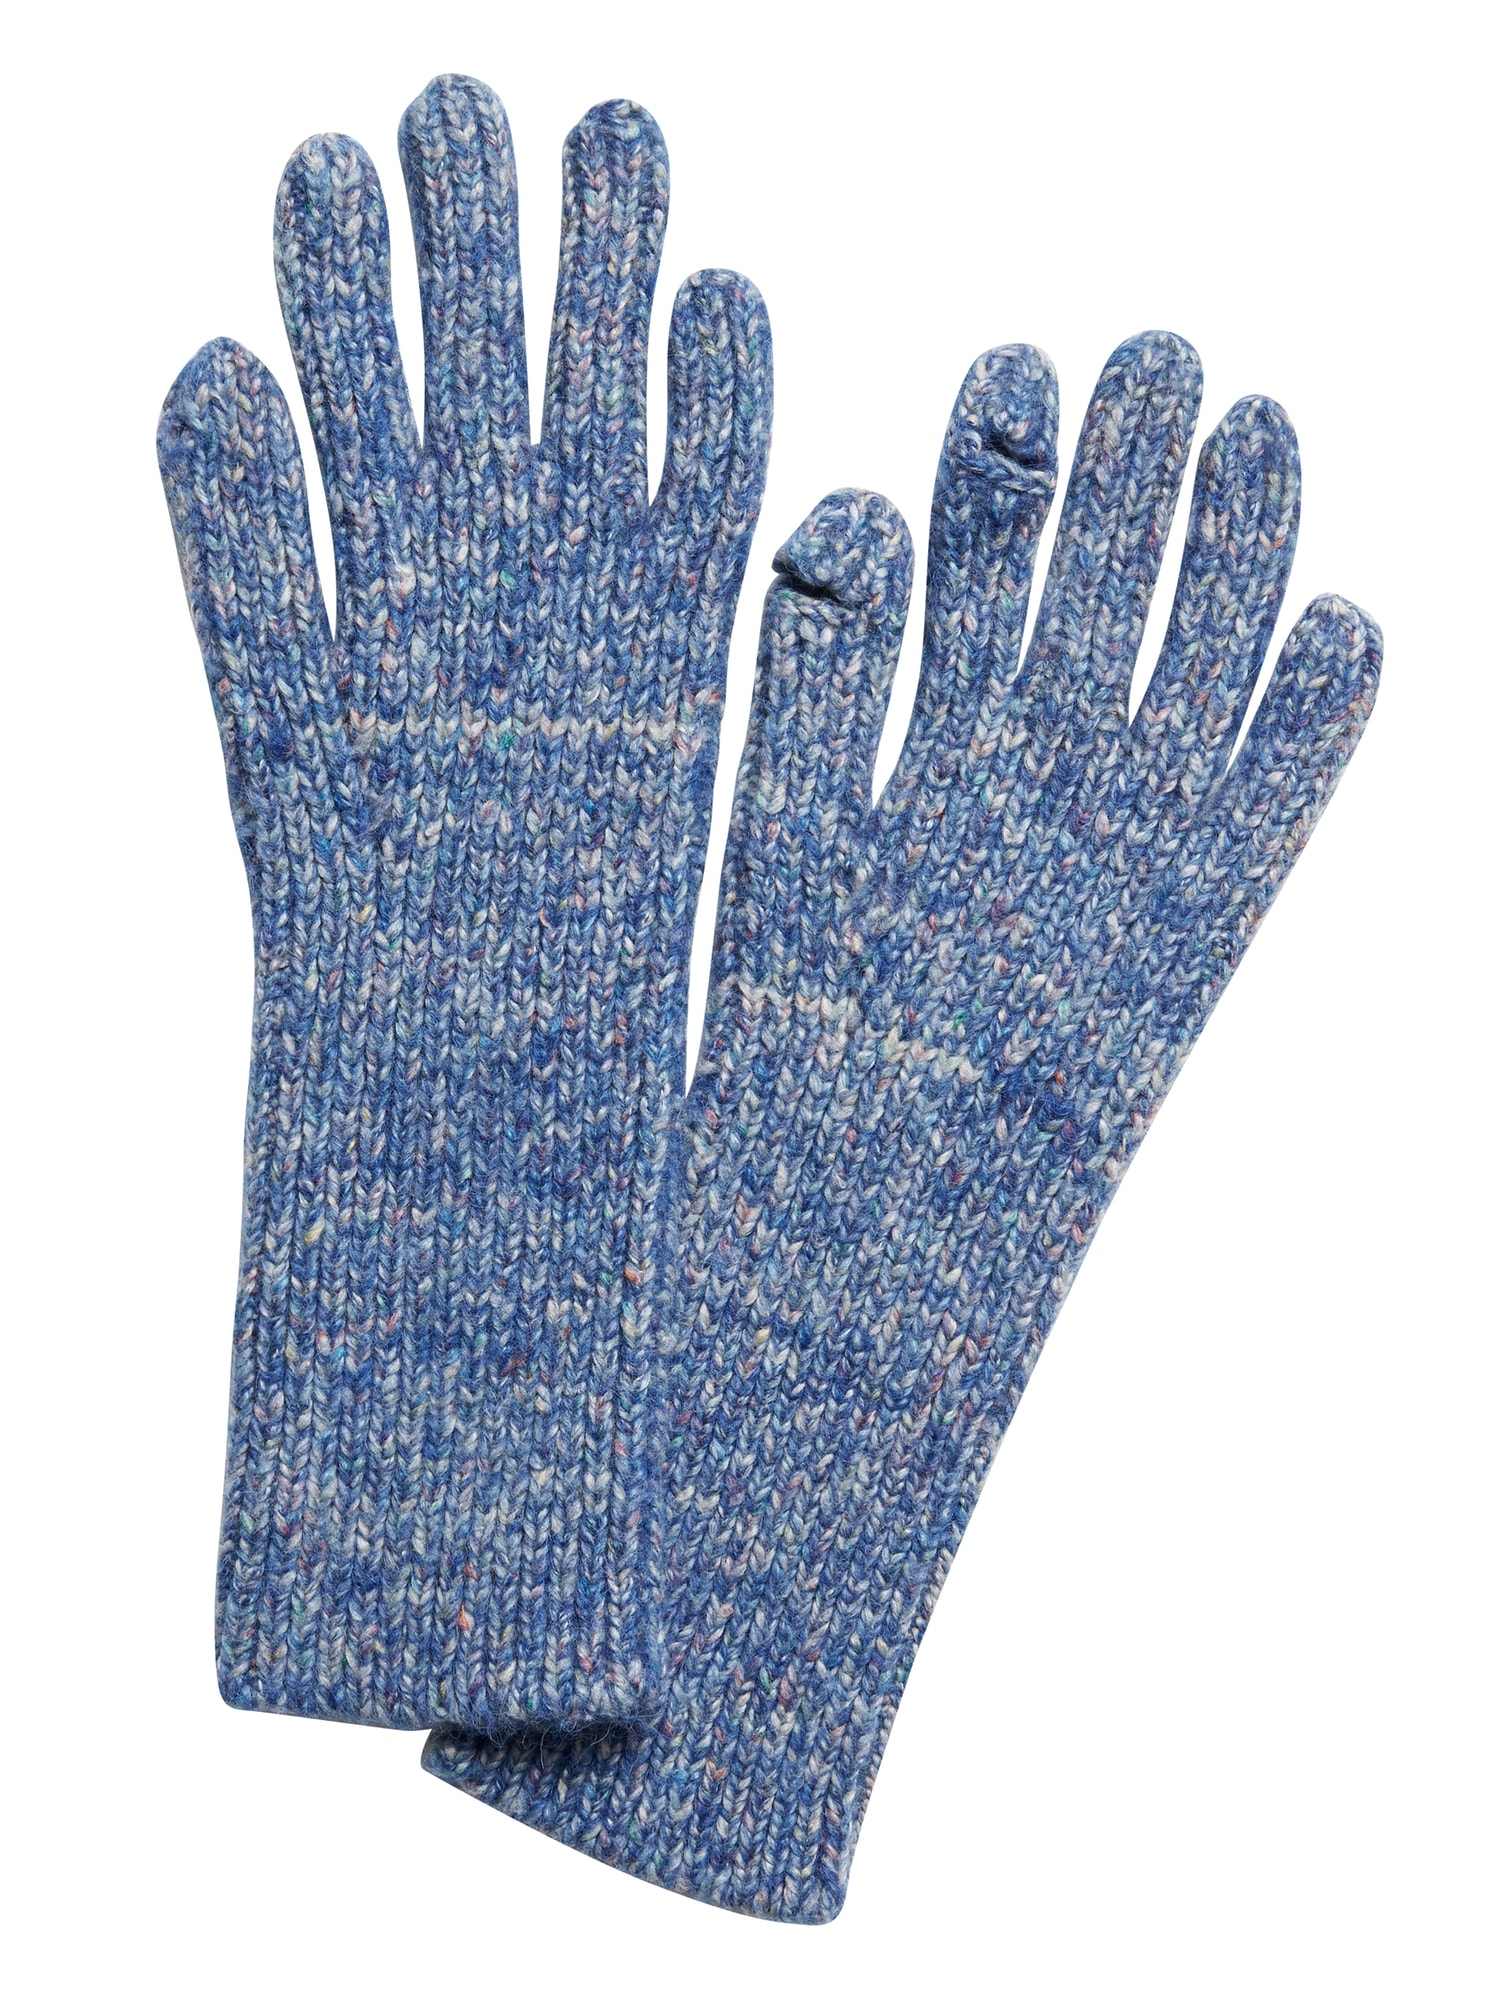 Ribbed Knit Texting Gloves